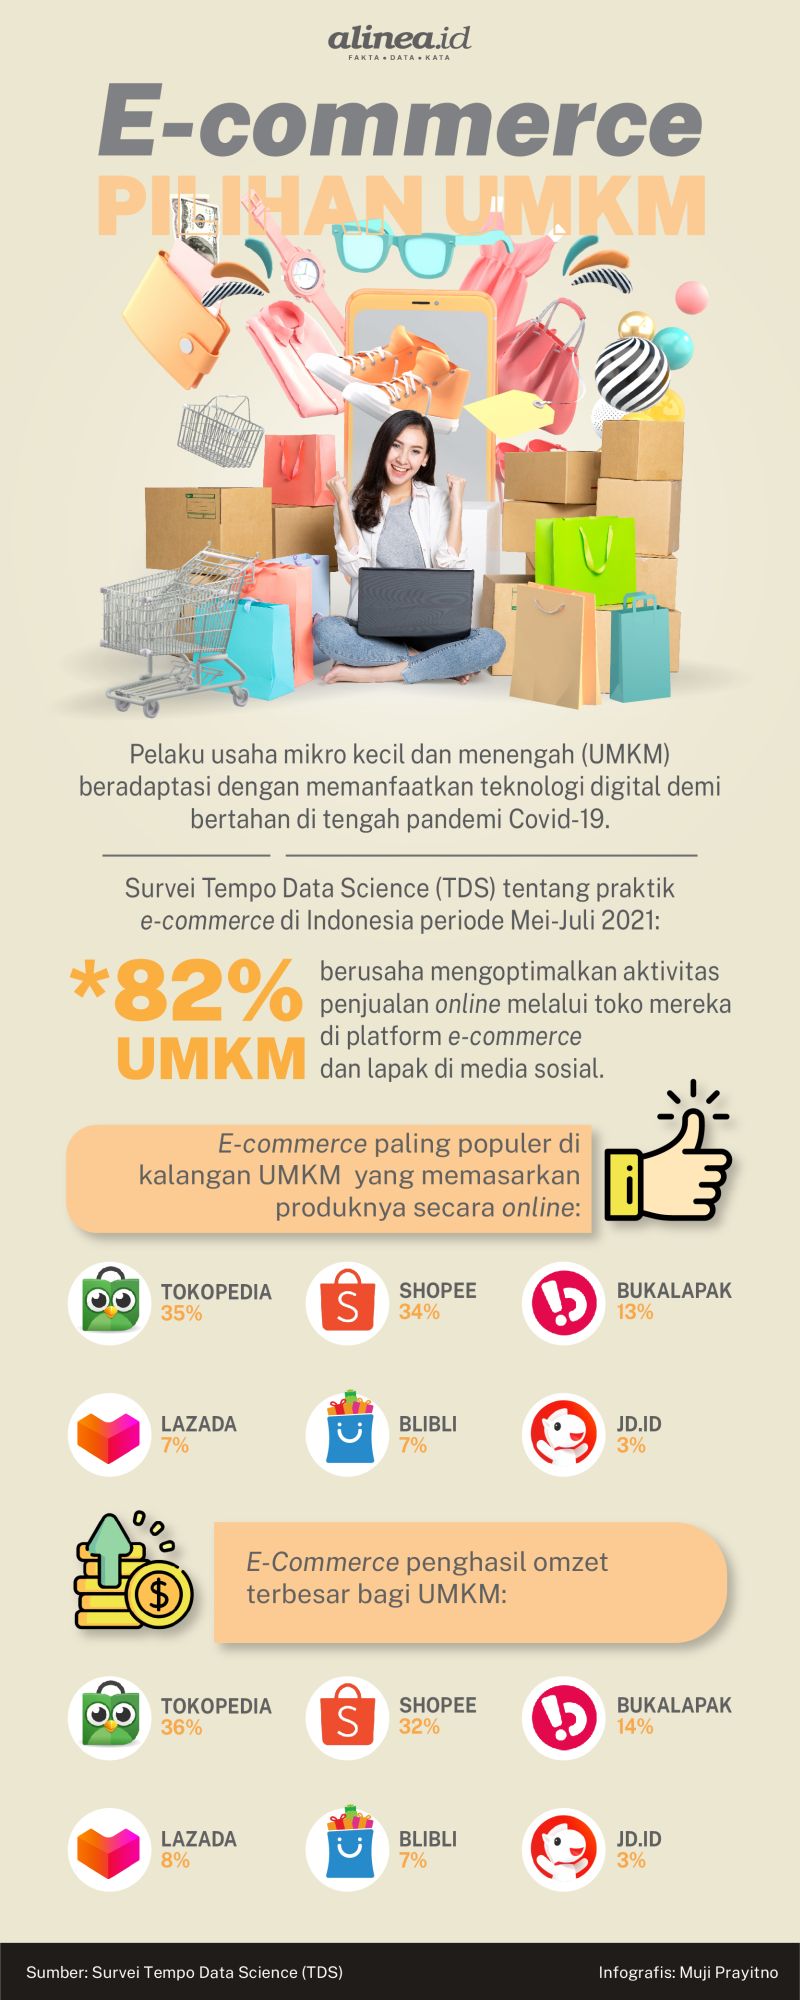 Infografik e-commerce pilihan UMKM. Alinea.id/Muji Prayitno. 